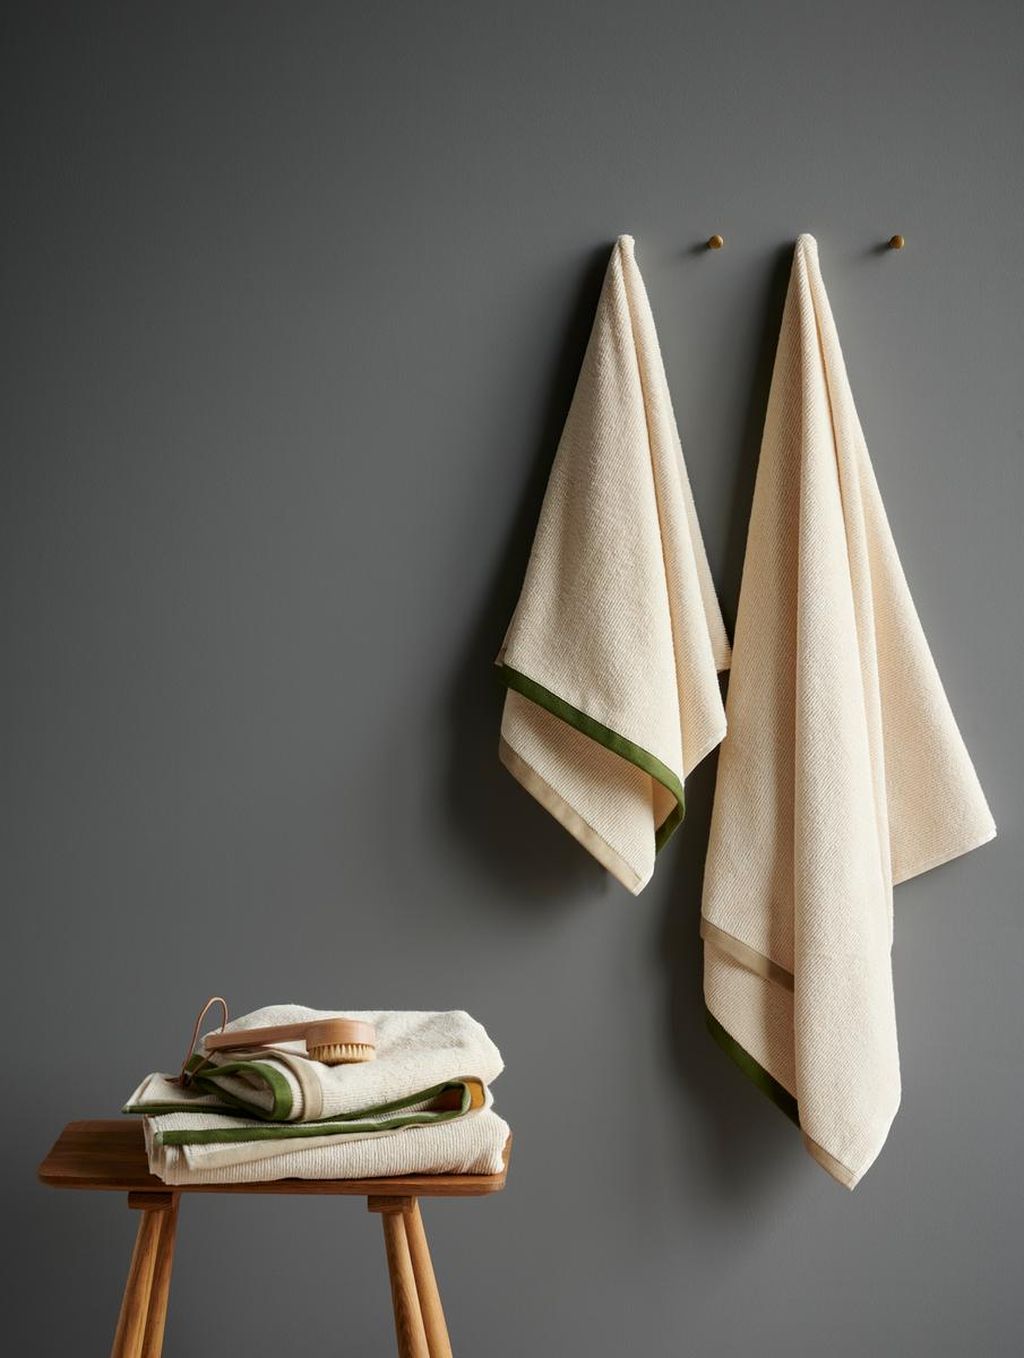 Södahl Kontrasthåndklæde 50x70, Olive